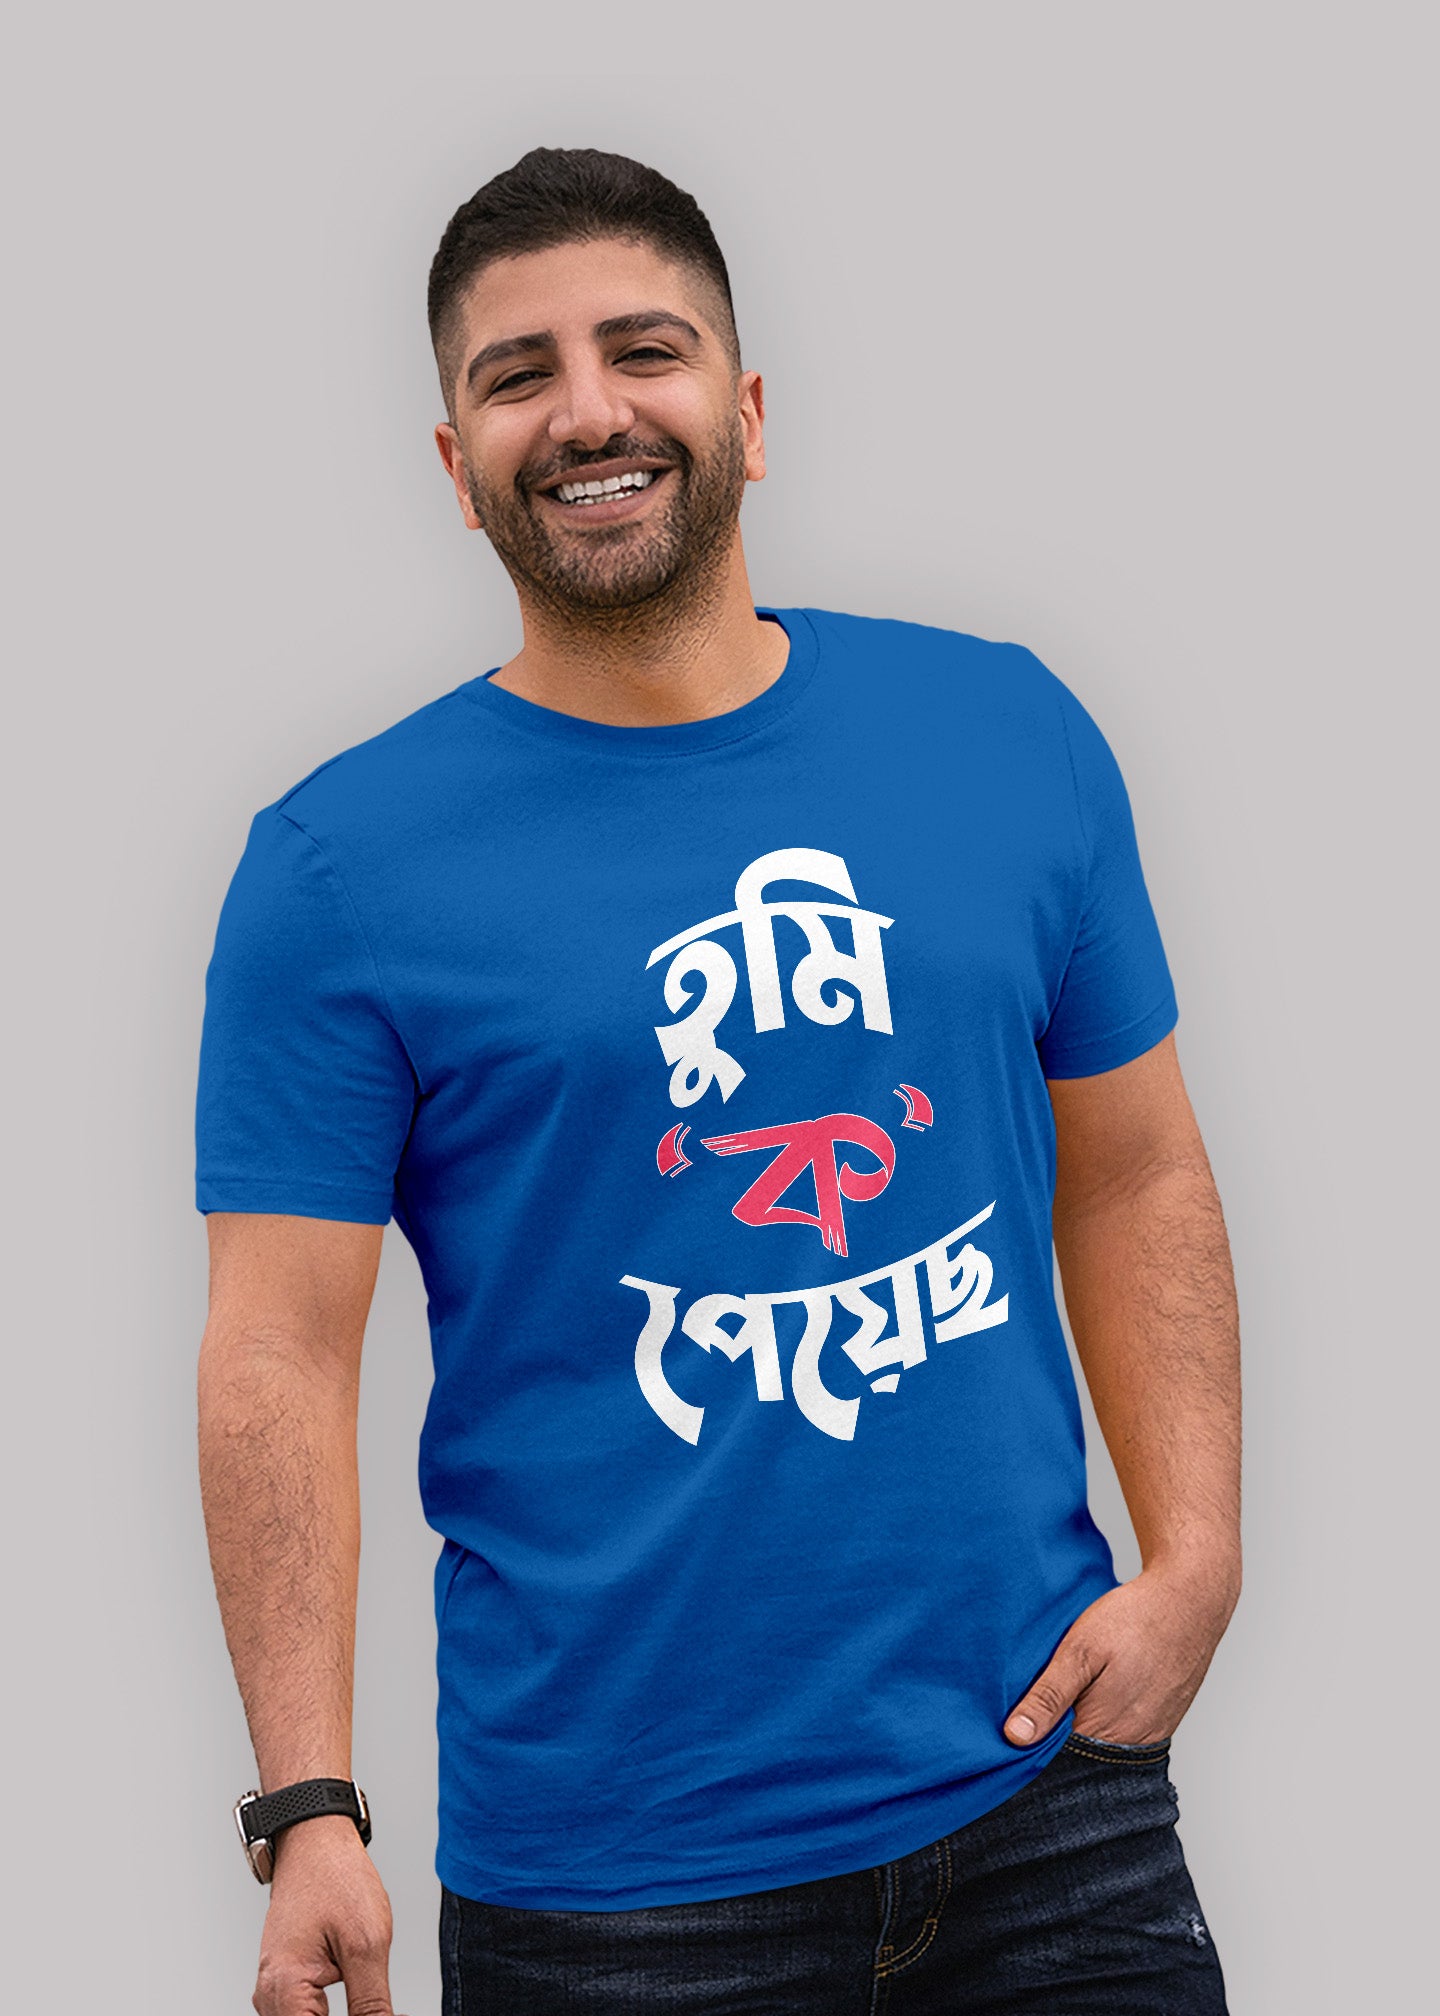 Tumi ko payocho bengali Printed Half Sleeve Premium Cotton T-shirt For Men